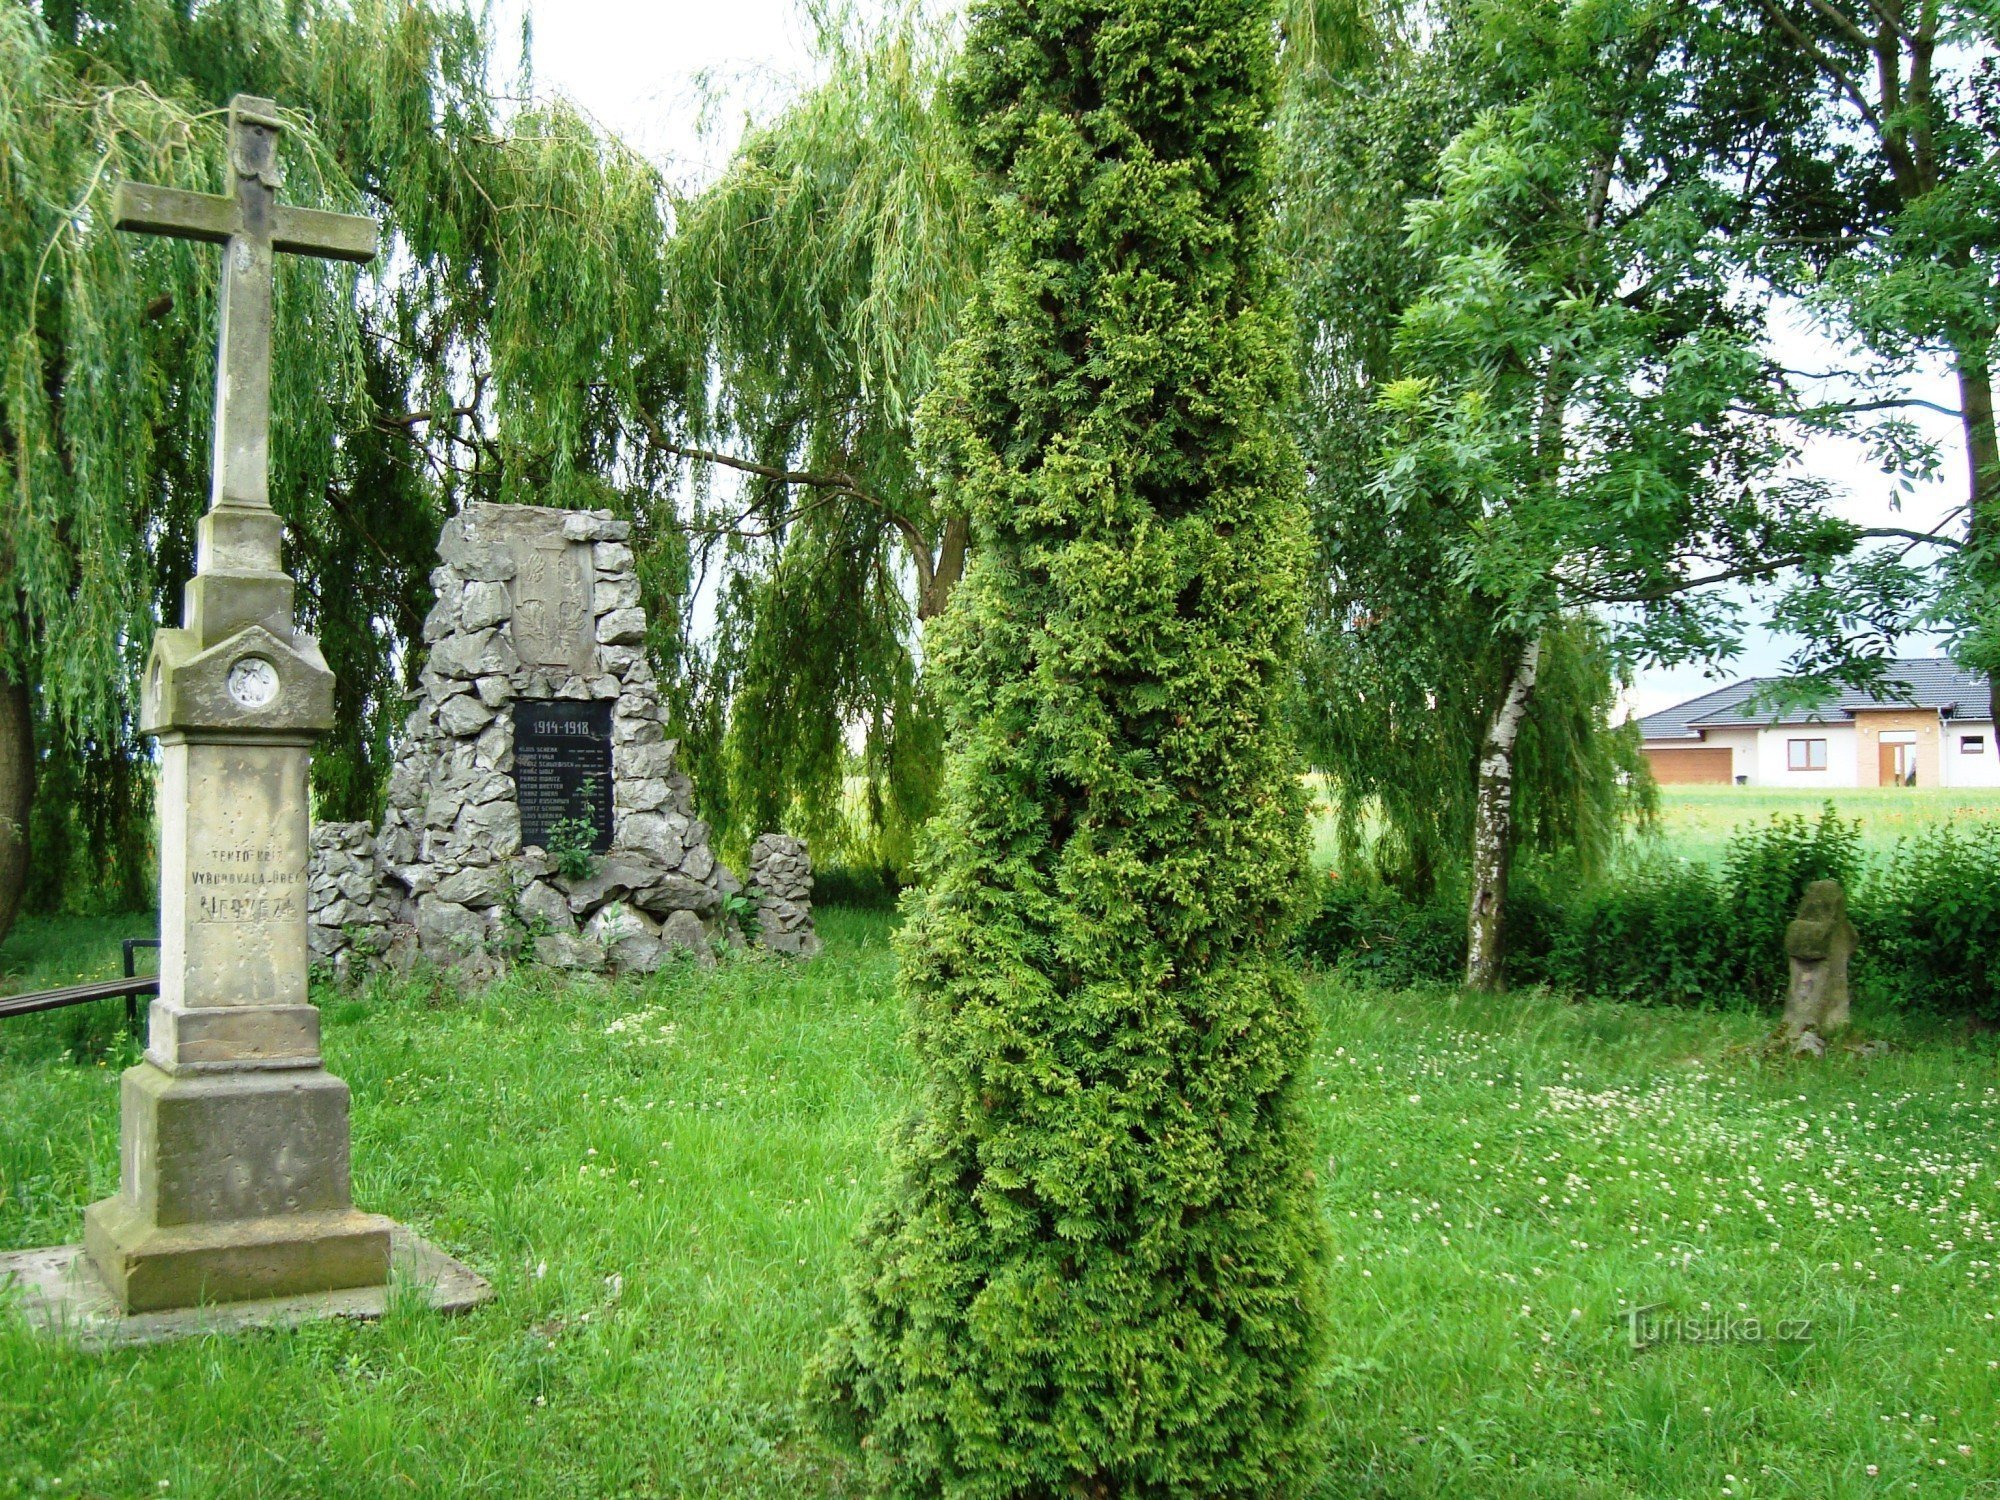 Park Nedvězí na początku wsi z krzyżem pojednania, krzyżem kamiennym z 1869 r. i pom